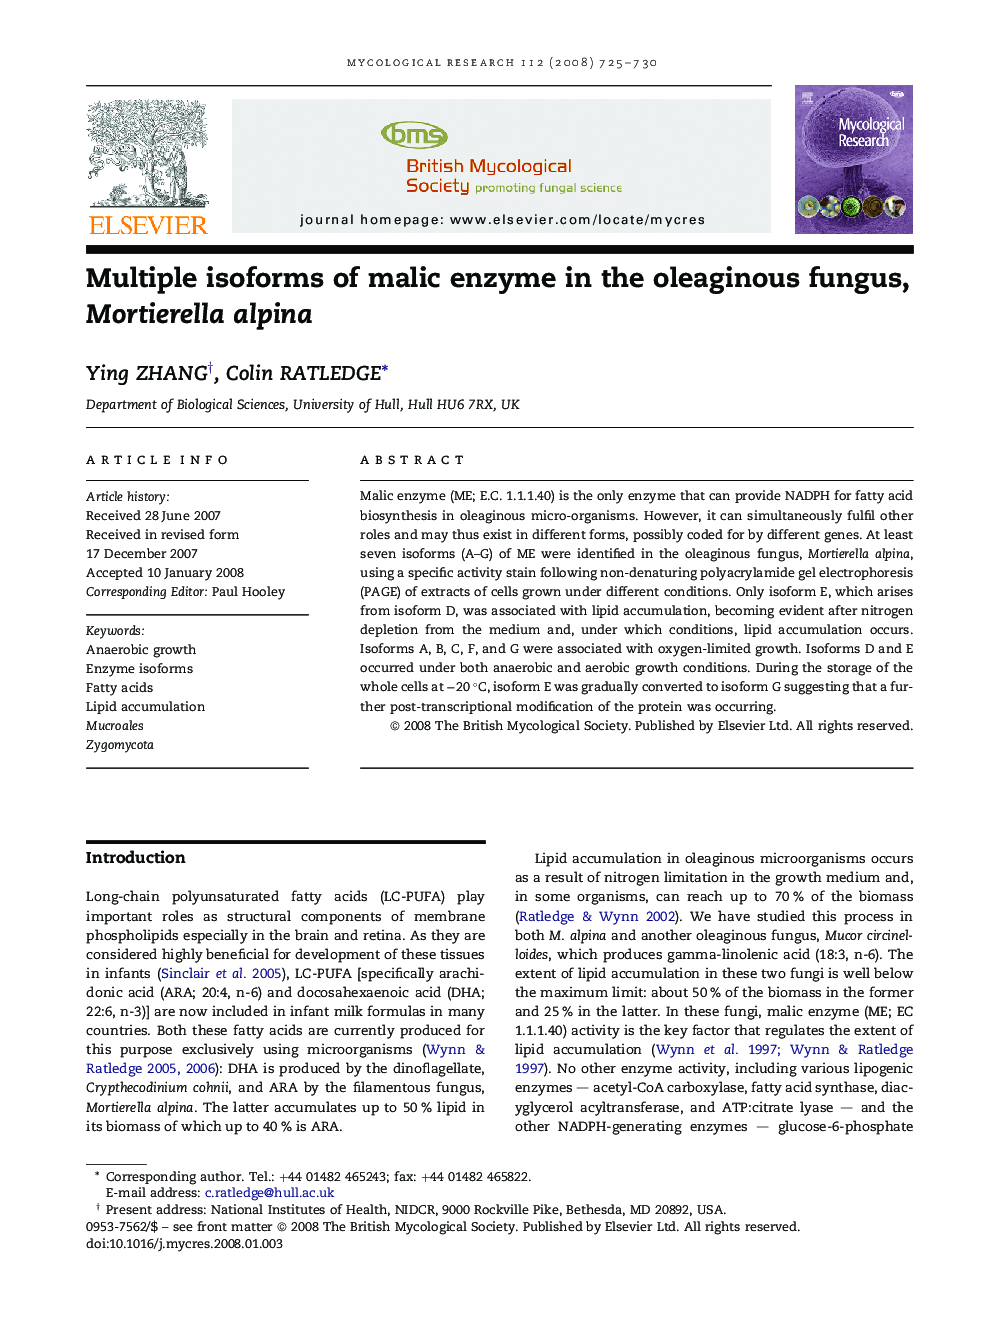 Multiple isoforms of malic enzyme in the oleaginous fungus, Mortierella alpina